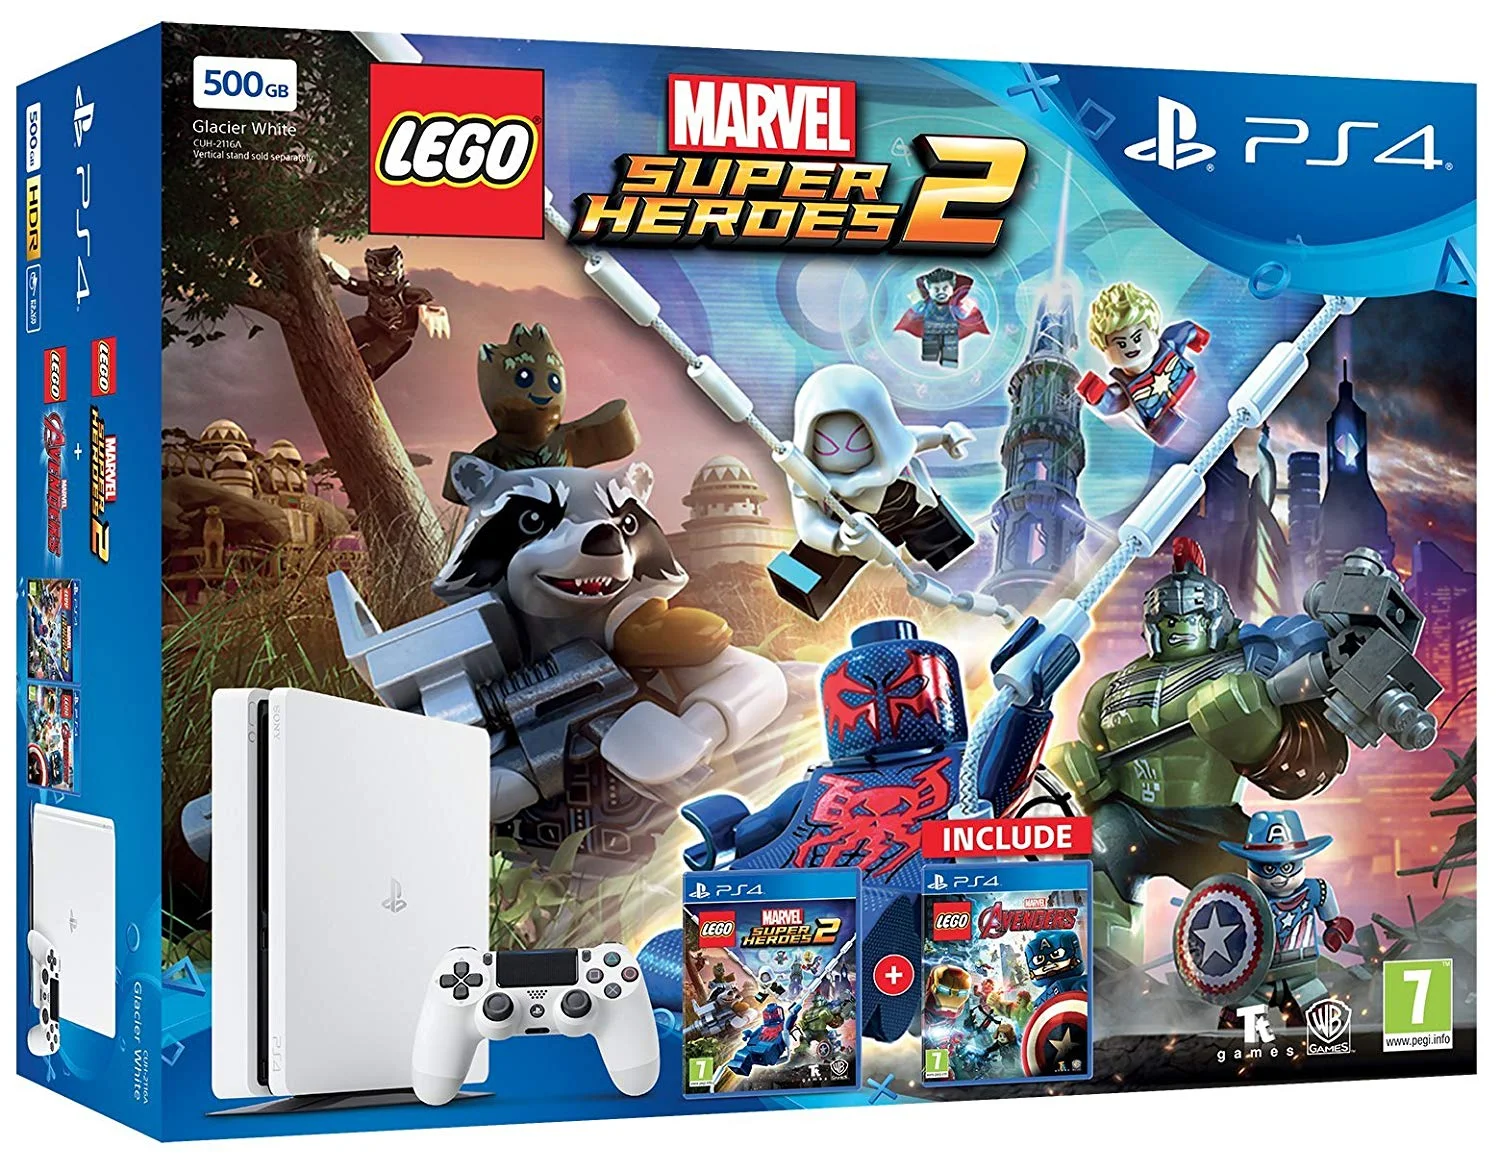  Sony PlayStation 4 Slim Lego Marvel Super Heroes 2 Bundle